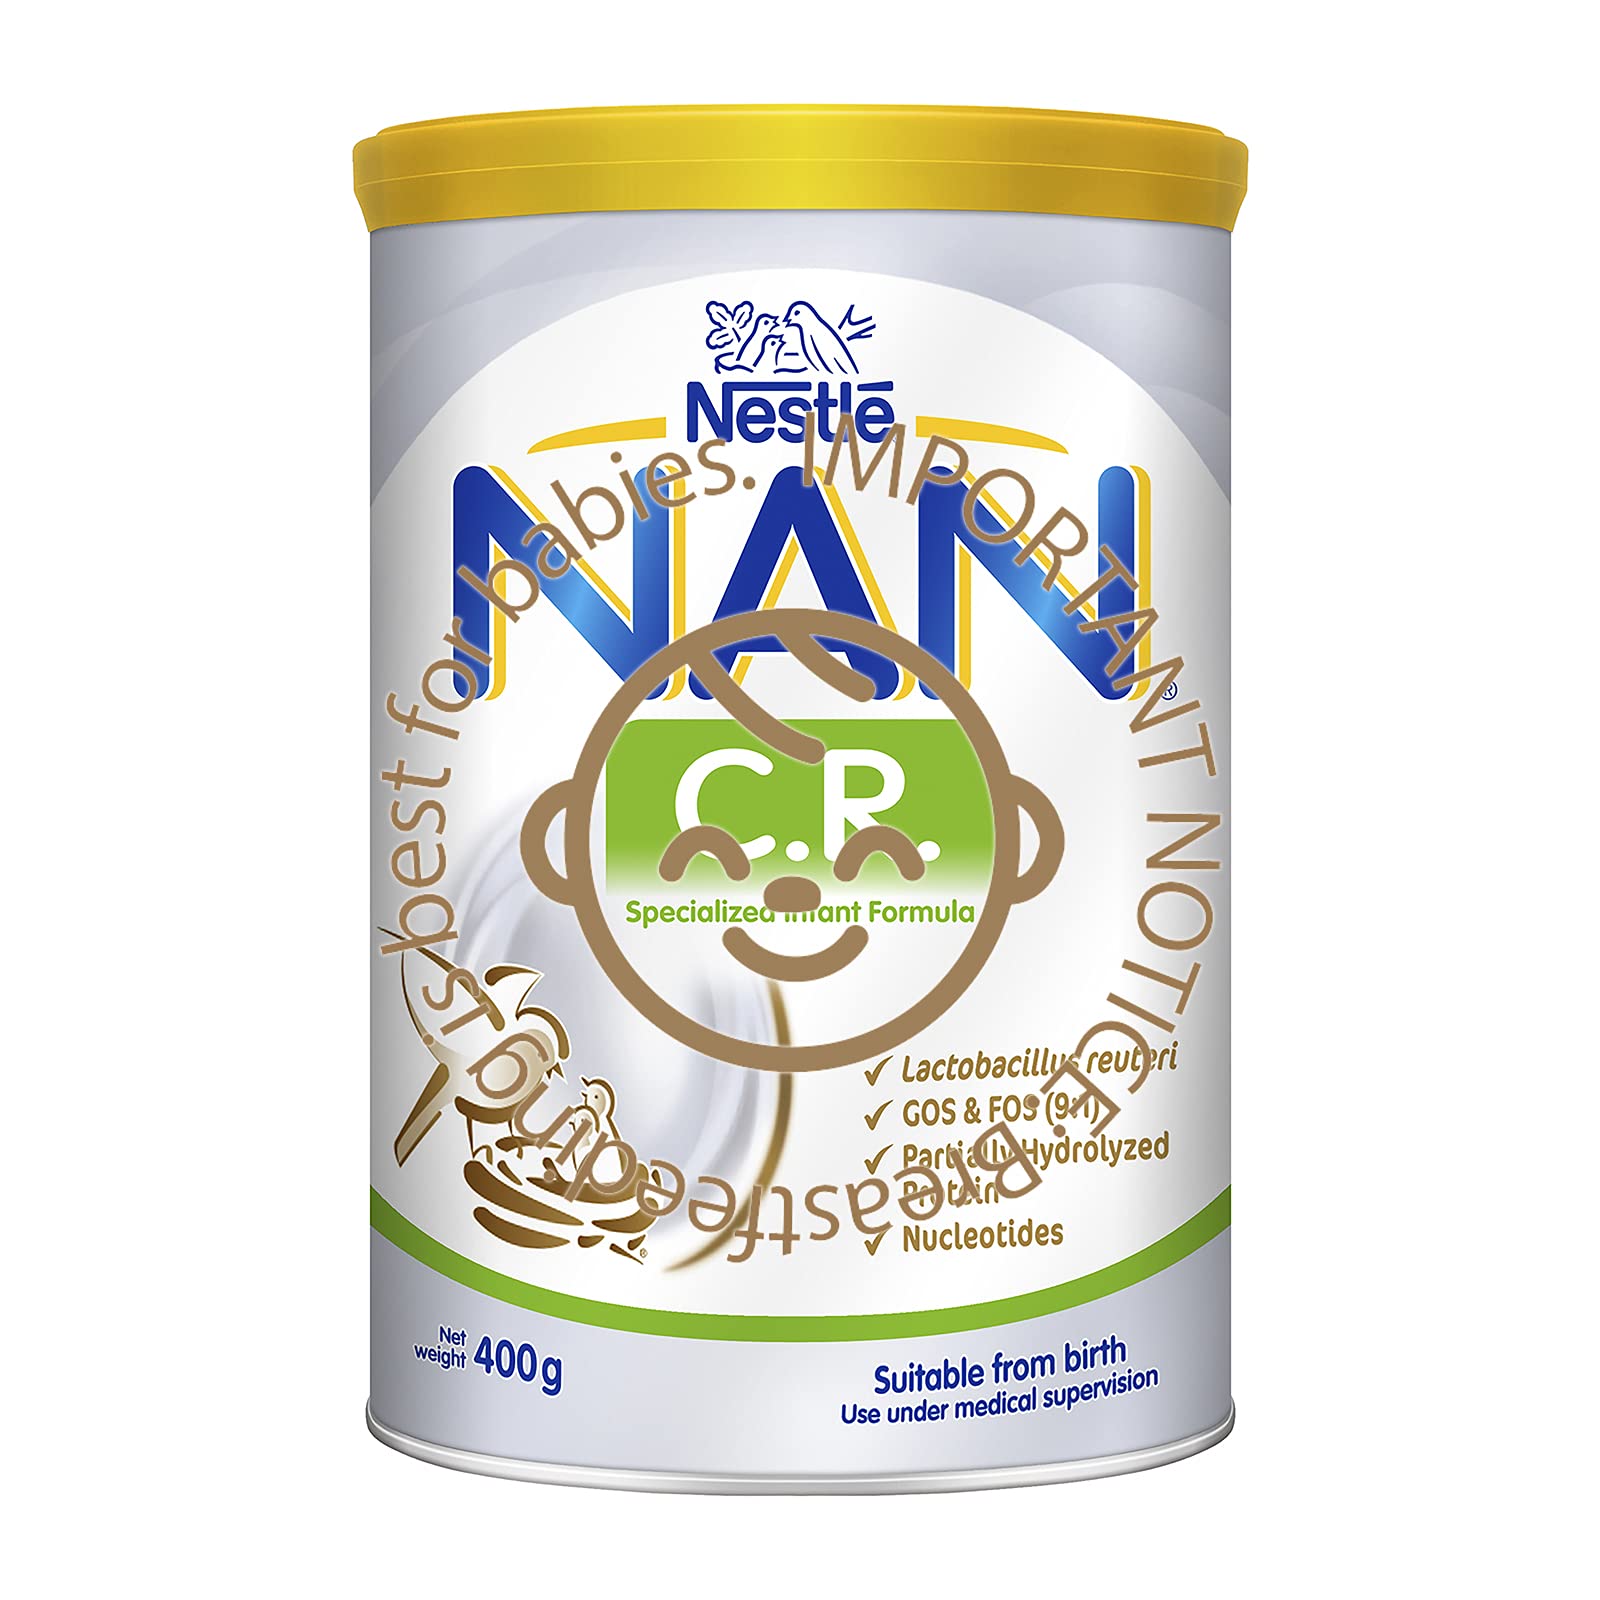 Nestle NAN C.R. Special Infant Formula